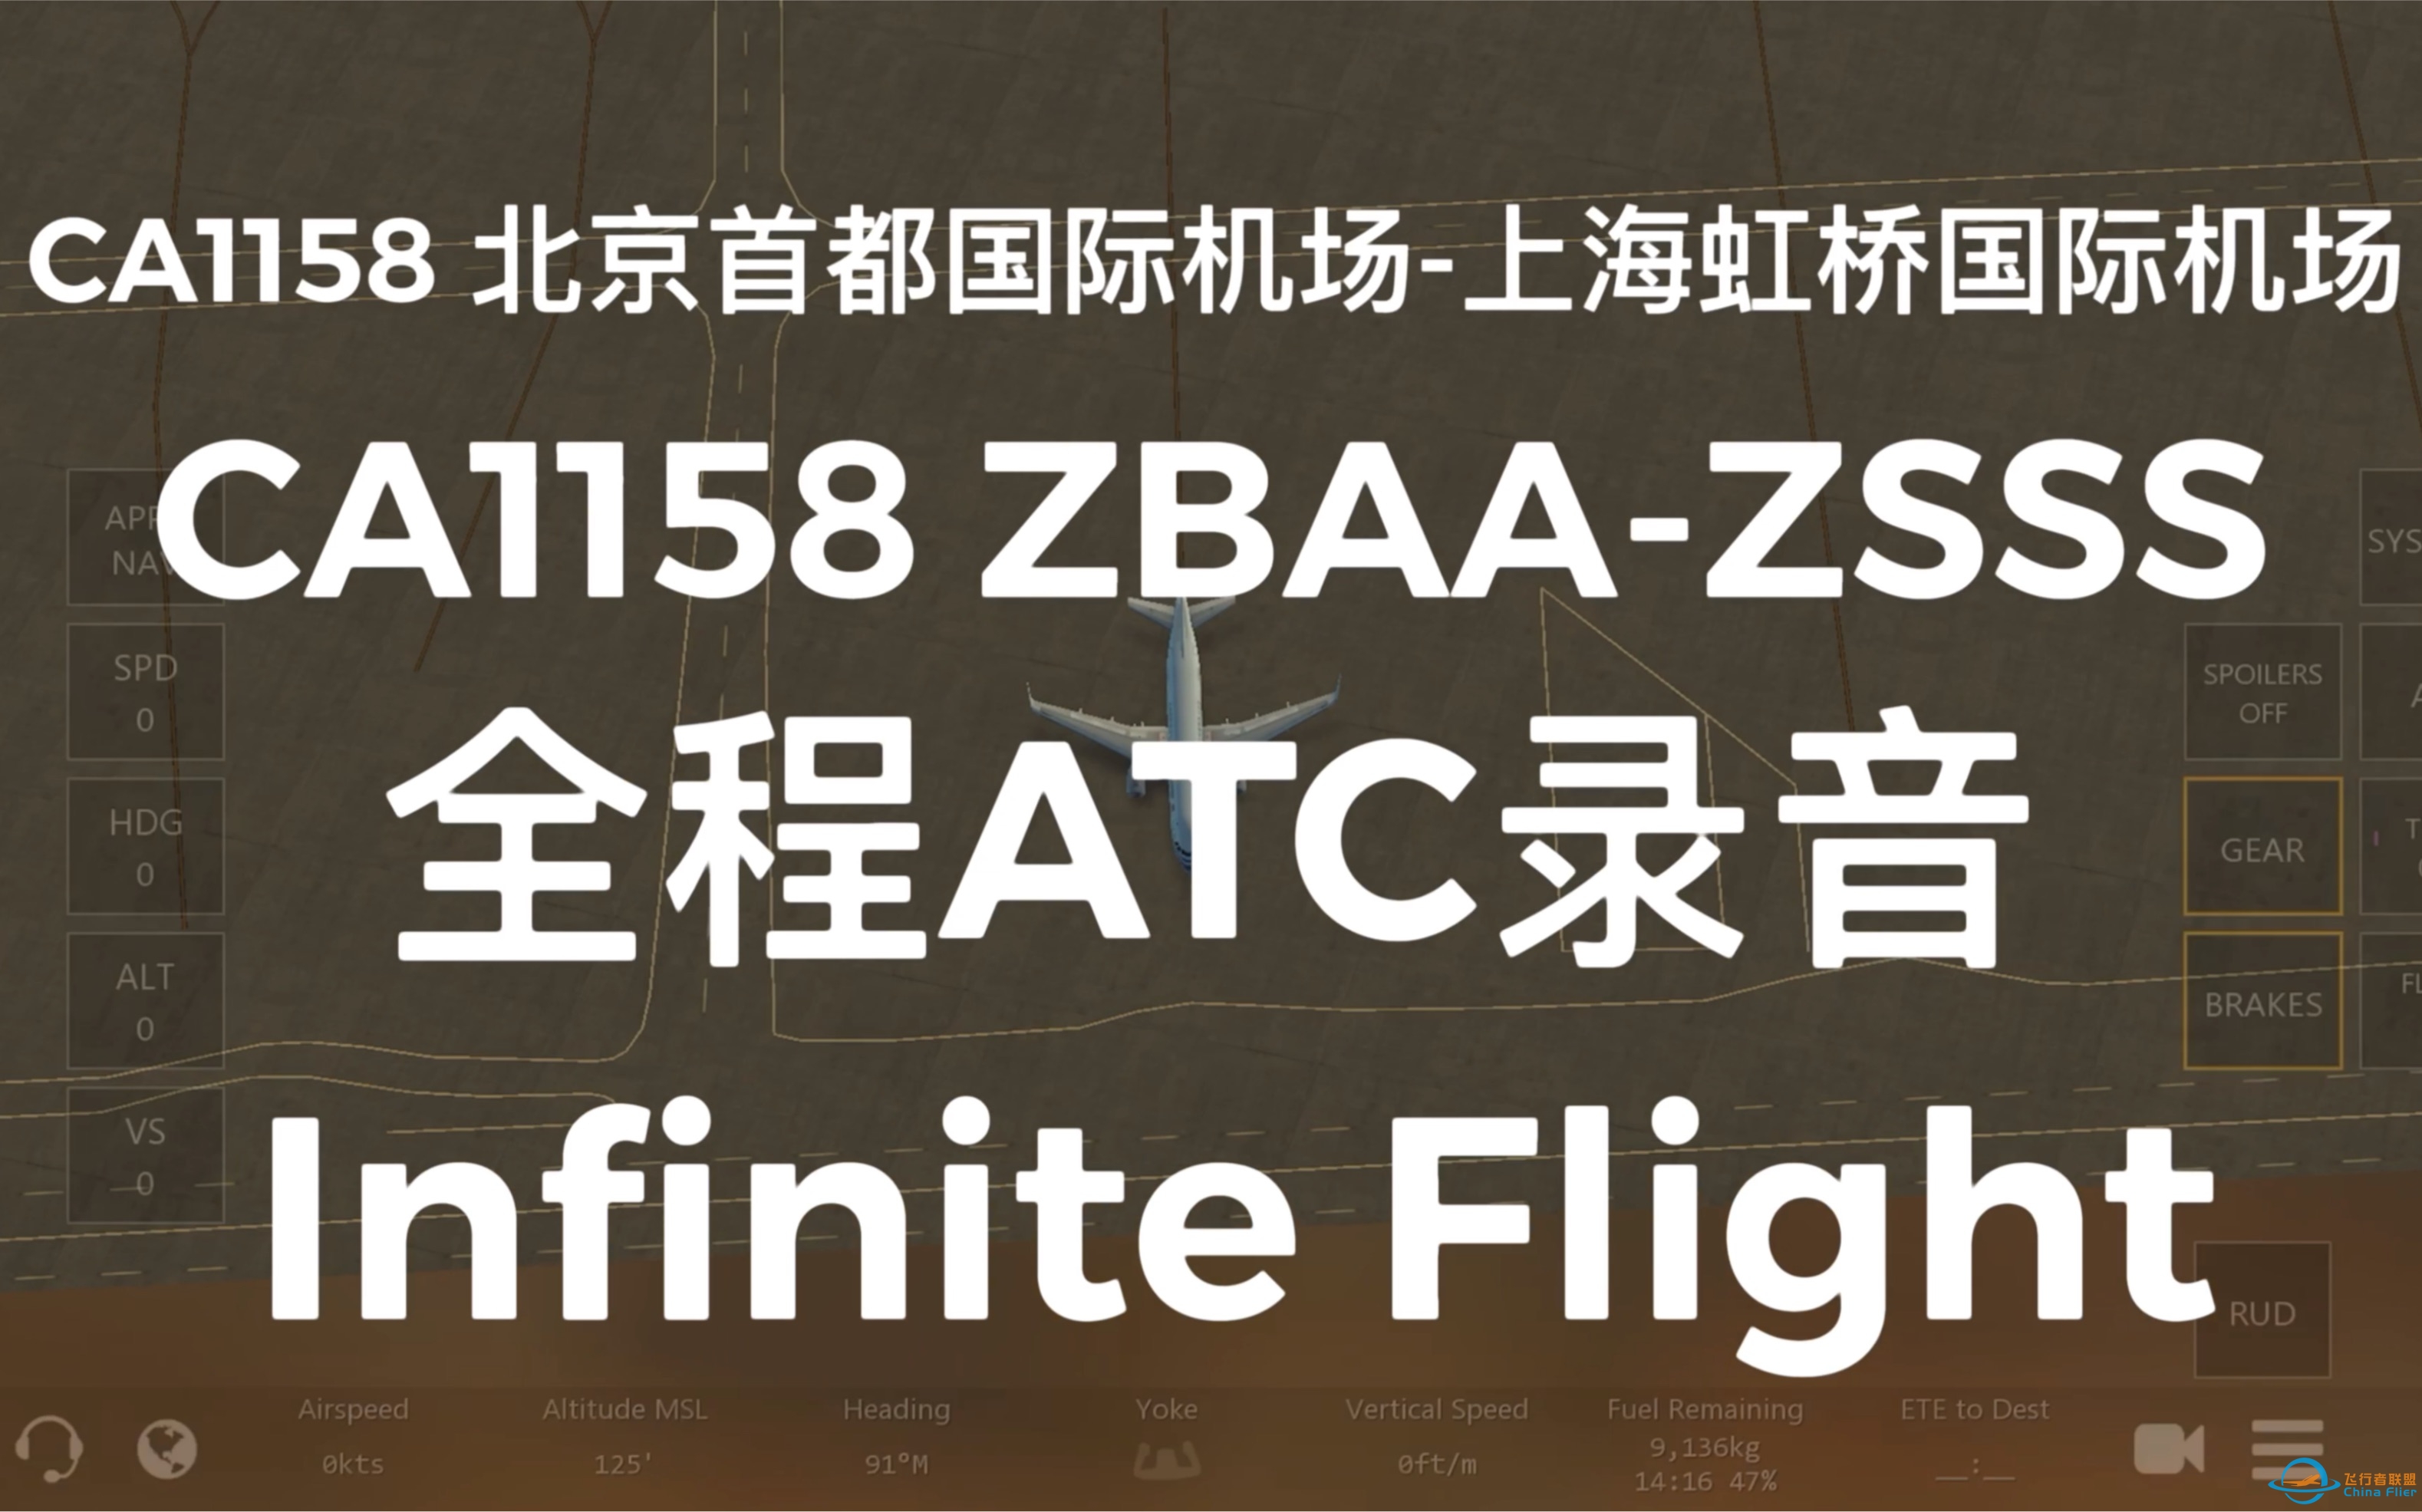 Infinite Flight CCA1158 北京首都PEK-上海虹桥SHA 飞行实录 （全程ATC录音）Part 1-1095 